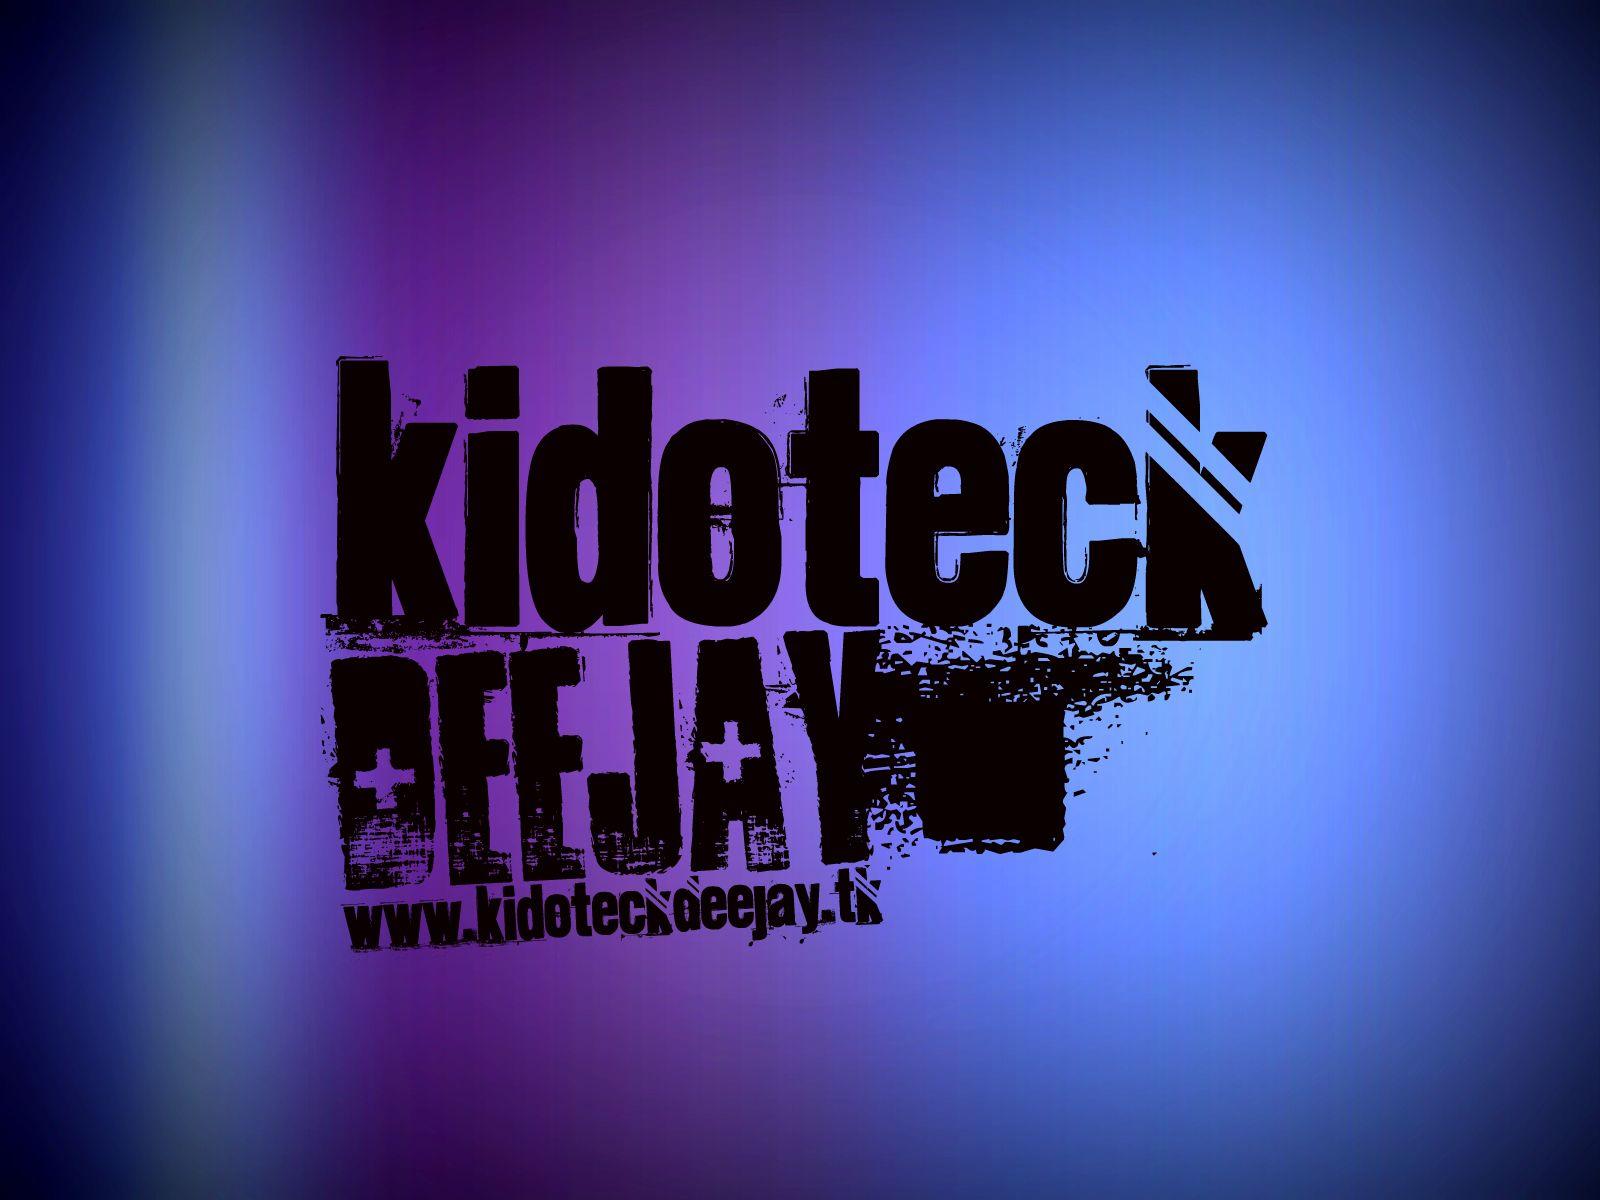 Kidoteck deejay wallpaper